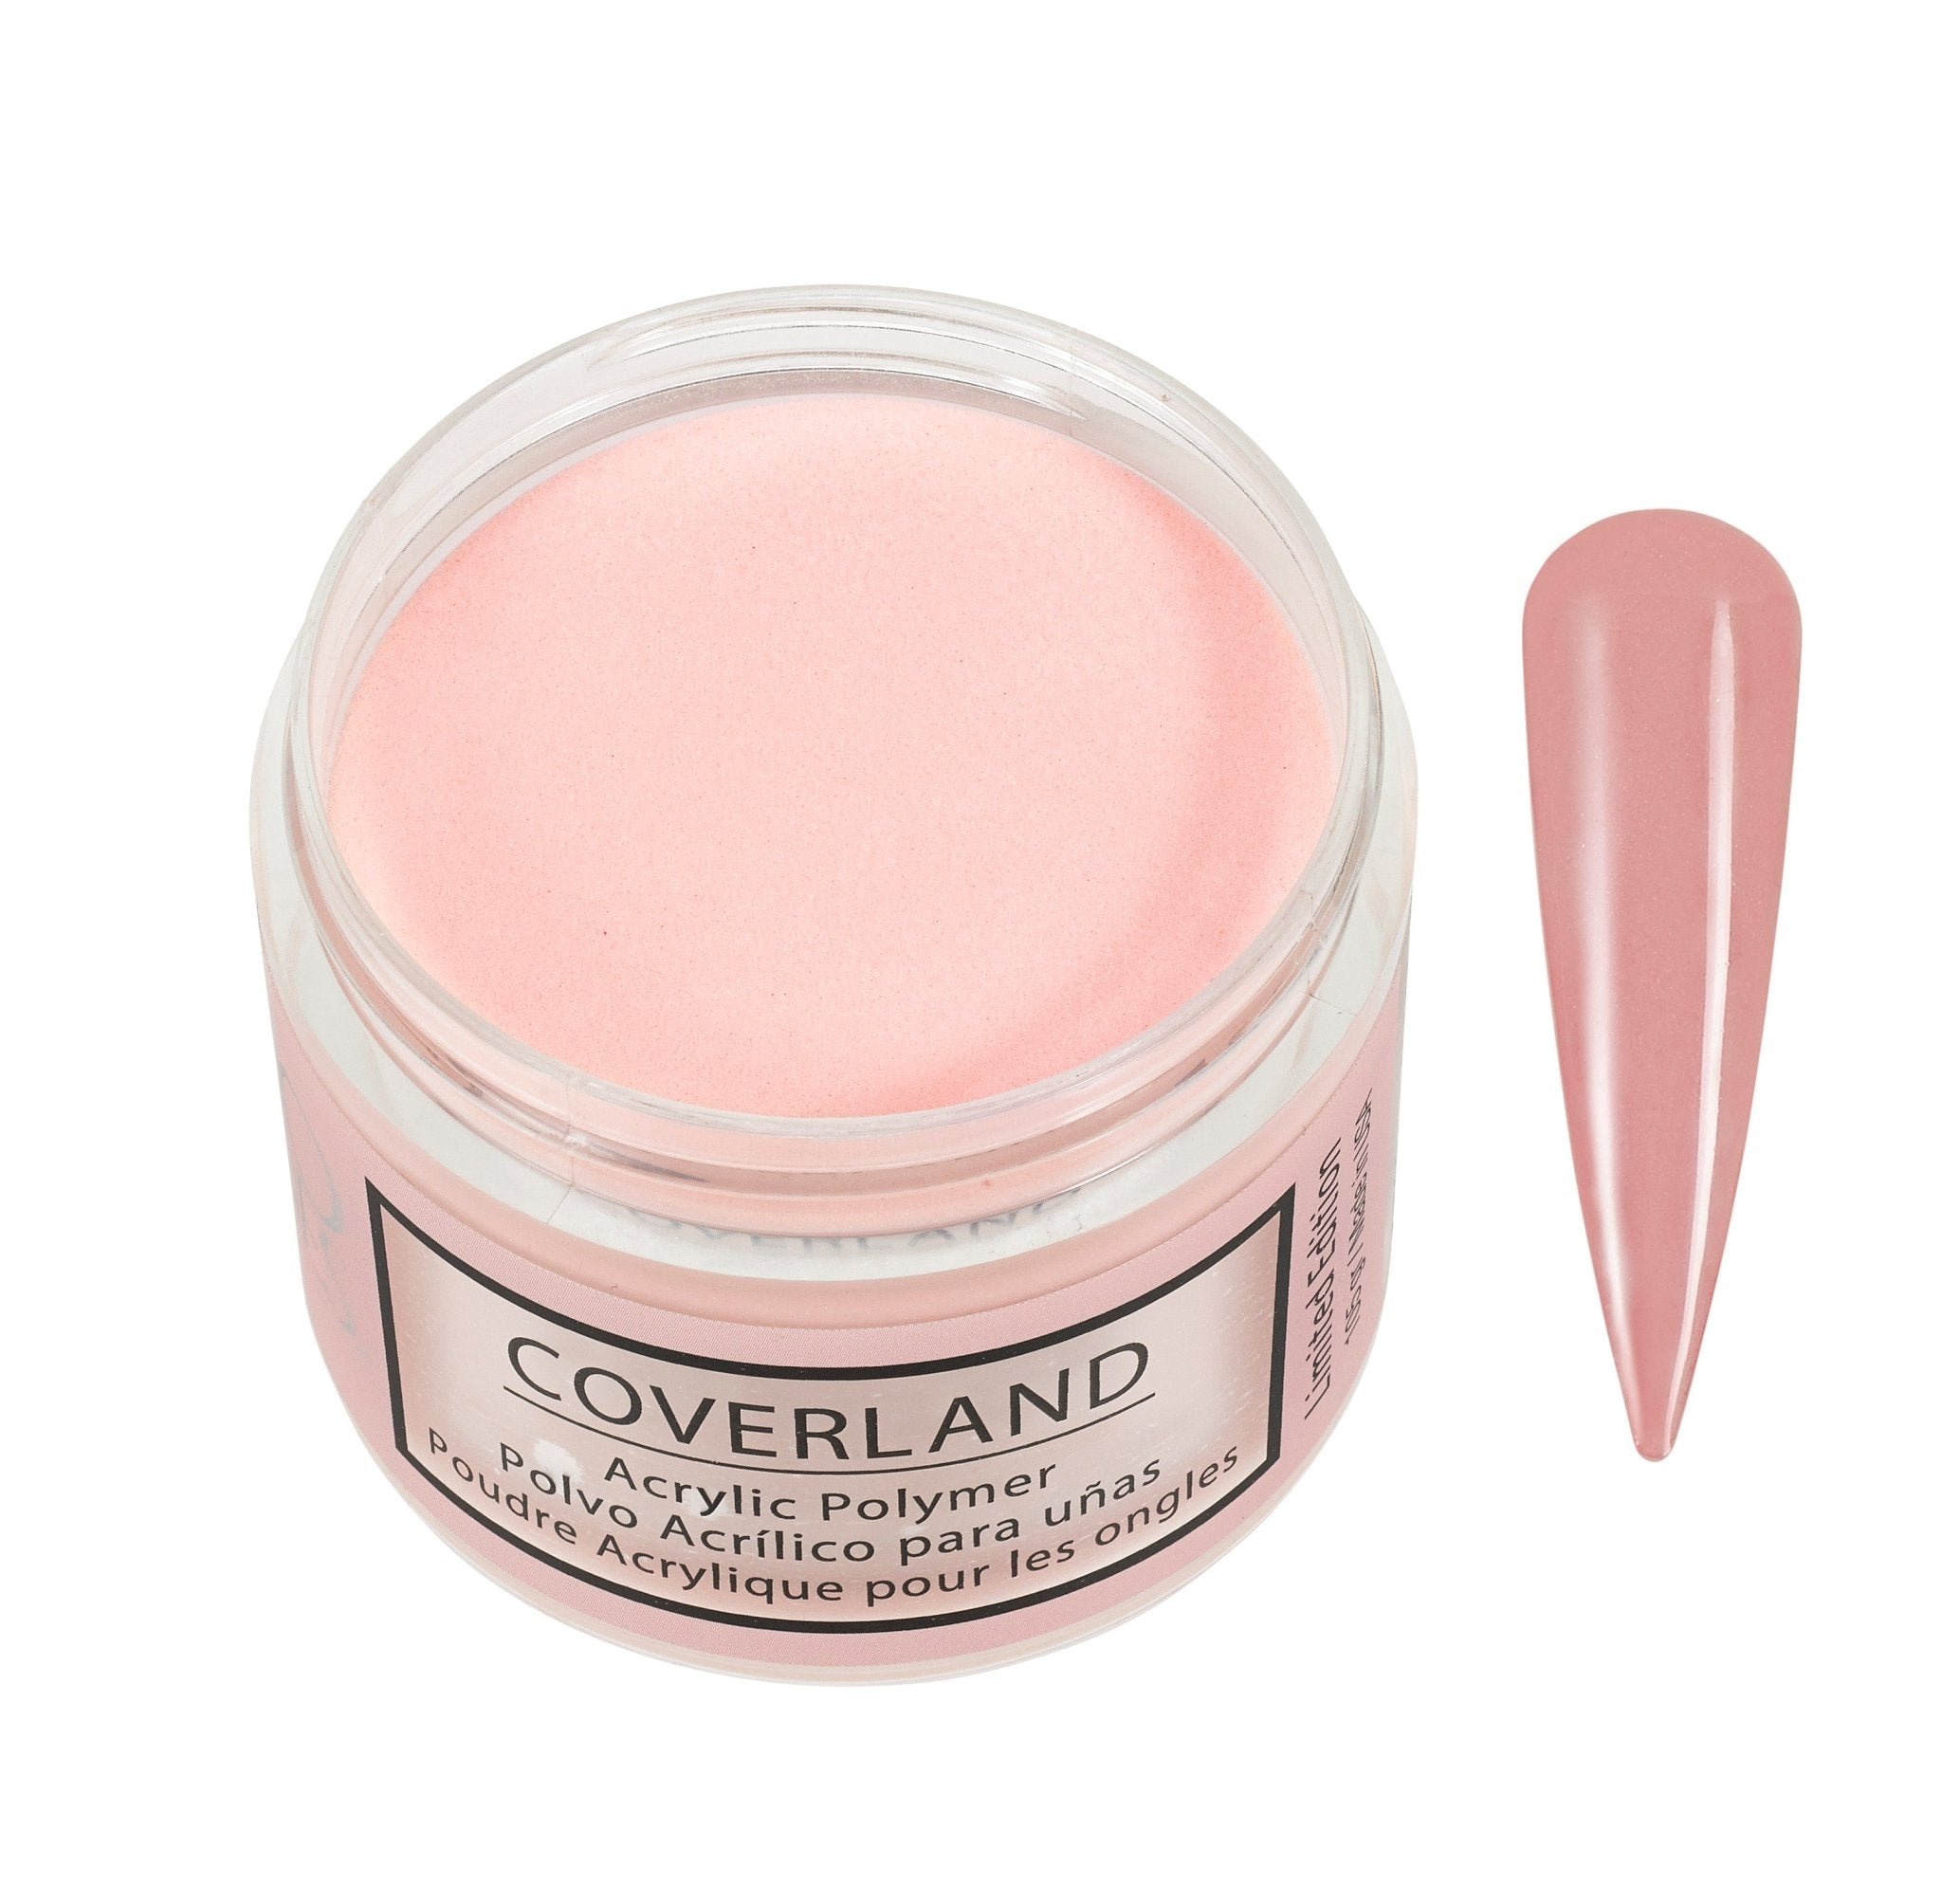 Coverland Limited Edition Acrylic Powder 3.5 